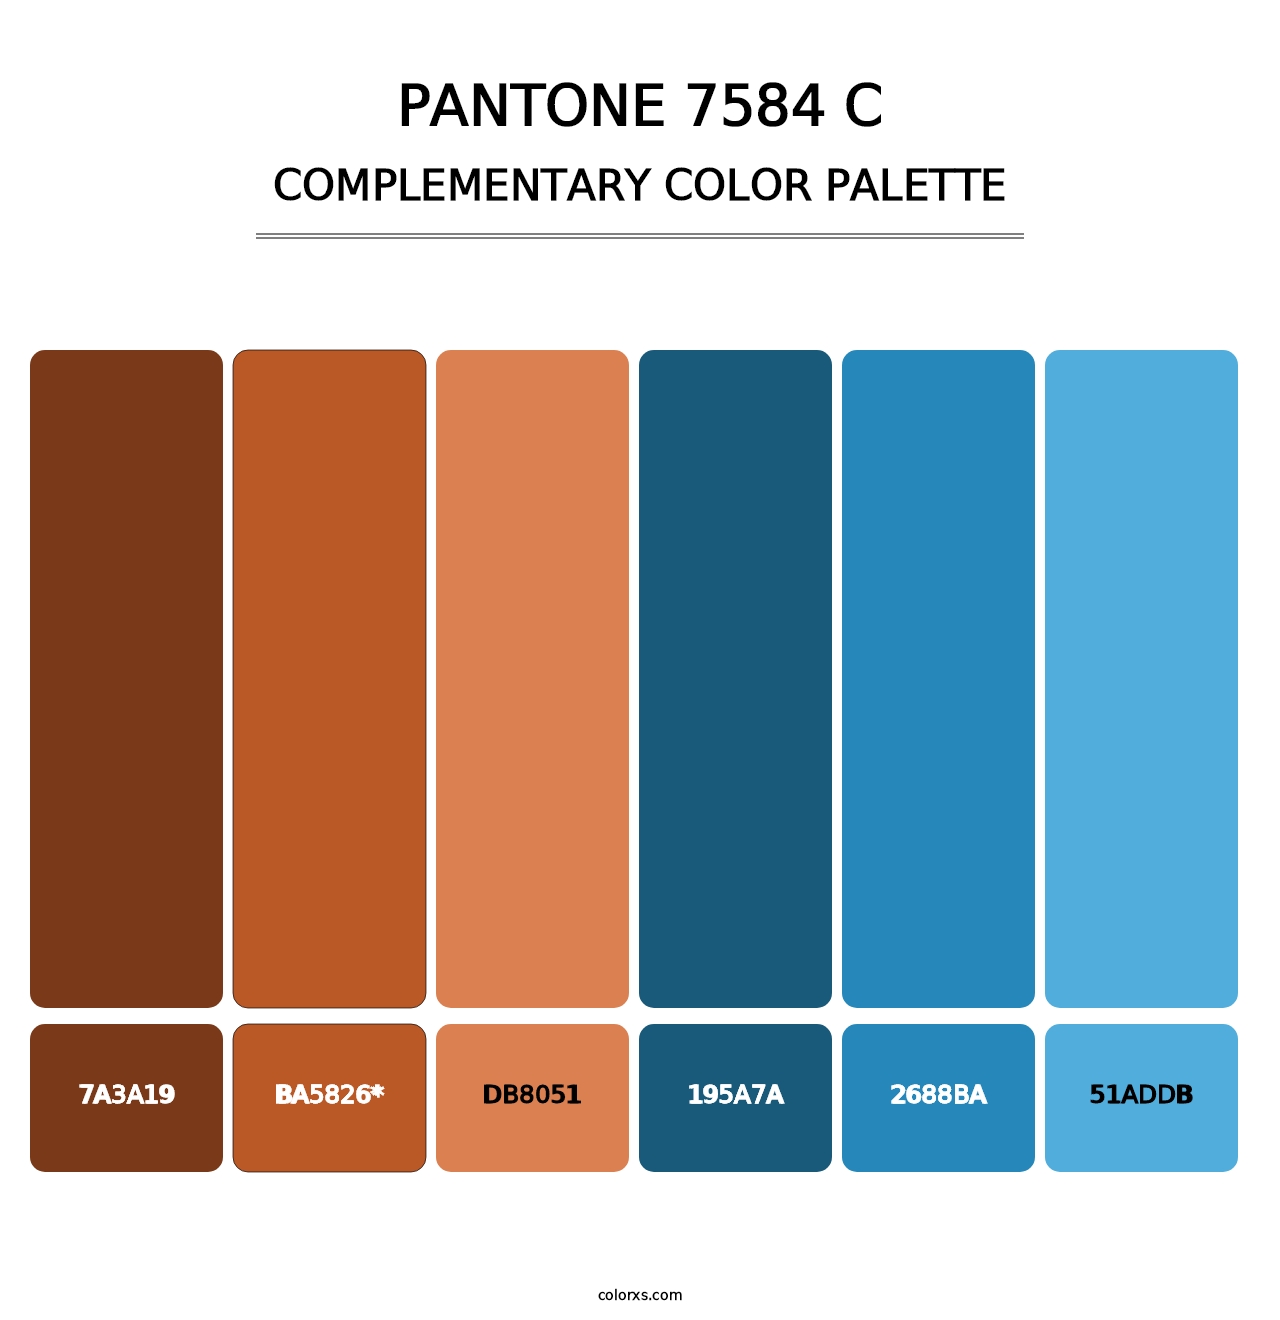 PANTONE 7584 C - Complementary Color Palette